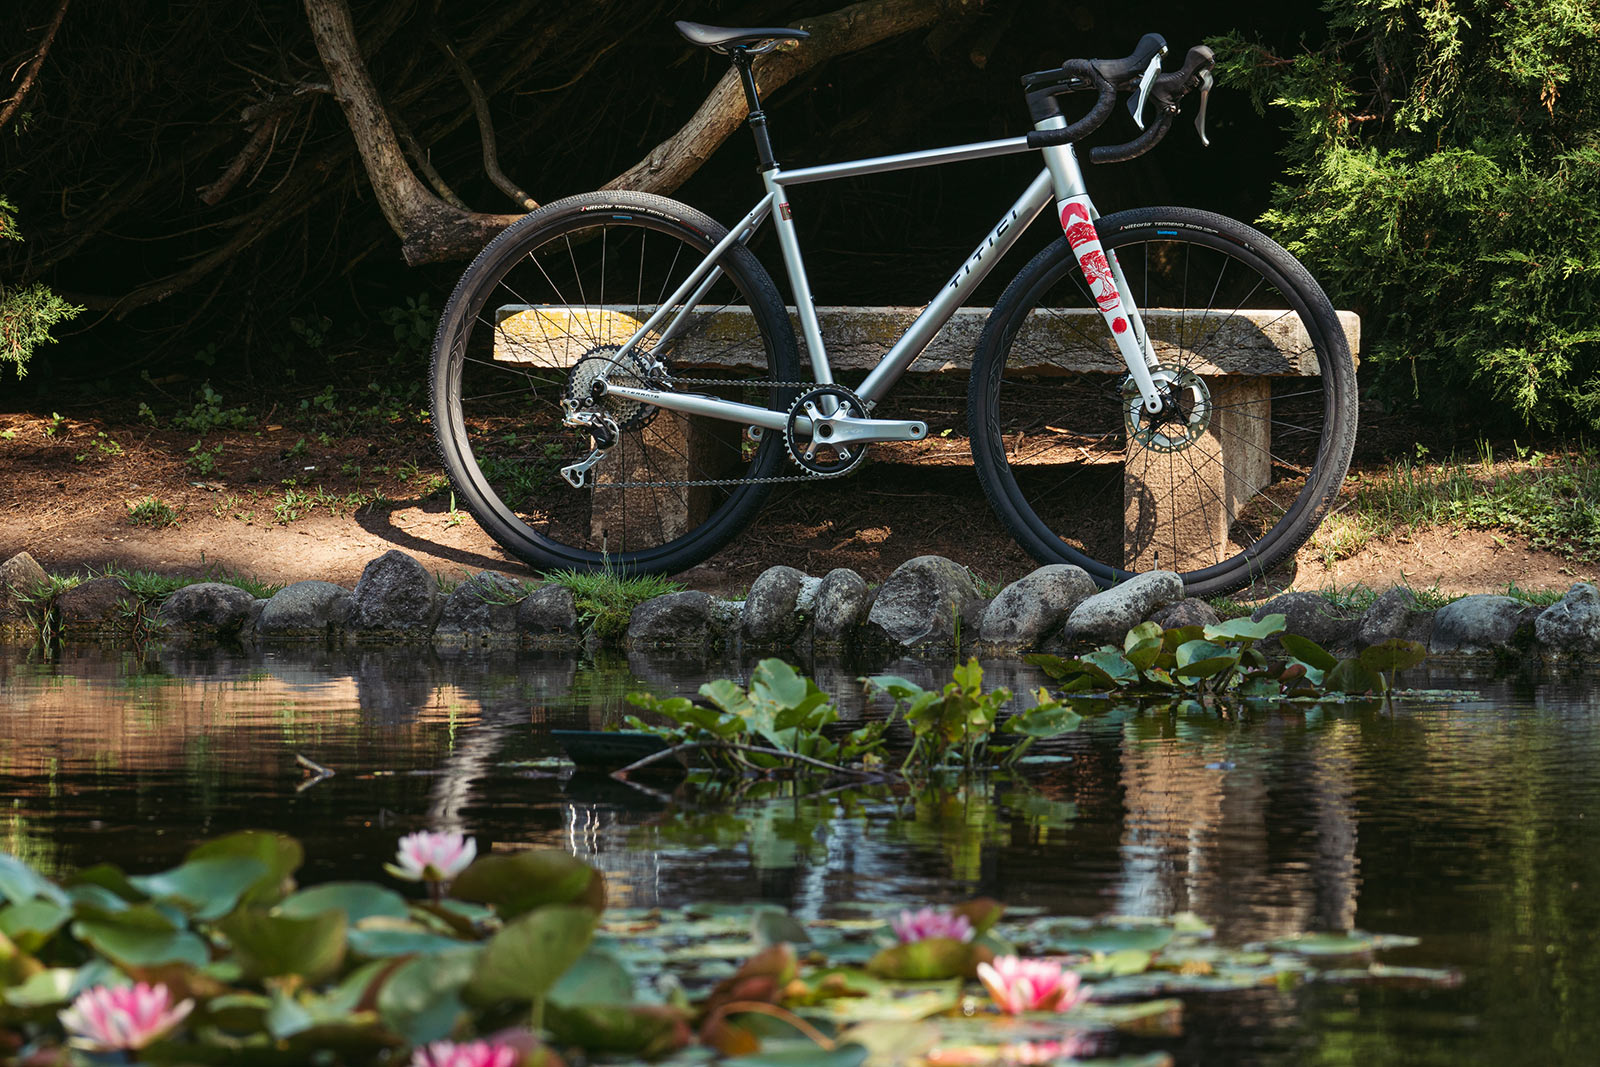 Titici Sterrato GRX LE limited edition handmade Italian steel gravel bike, flowering lake